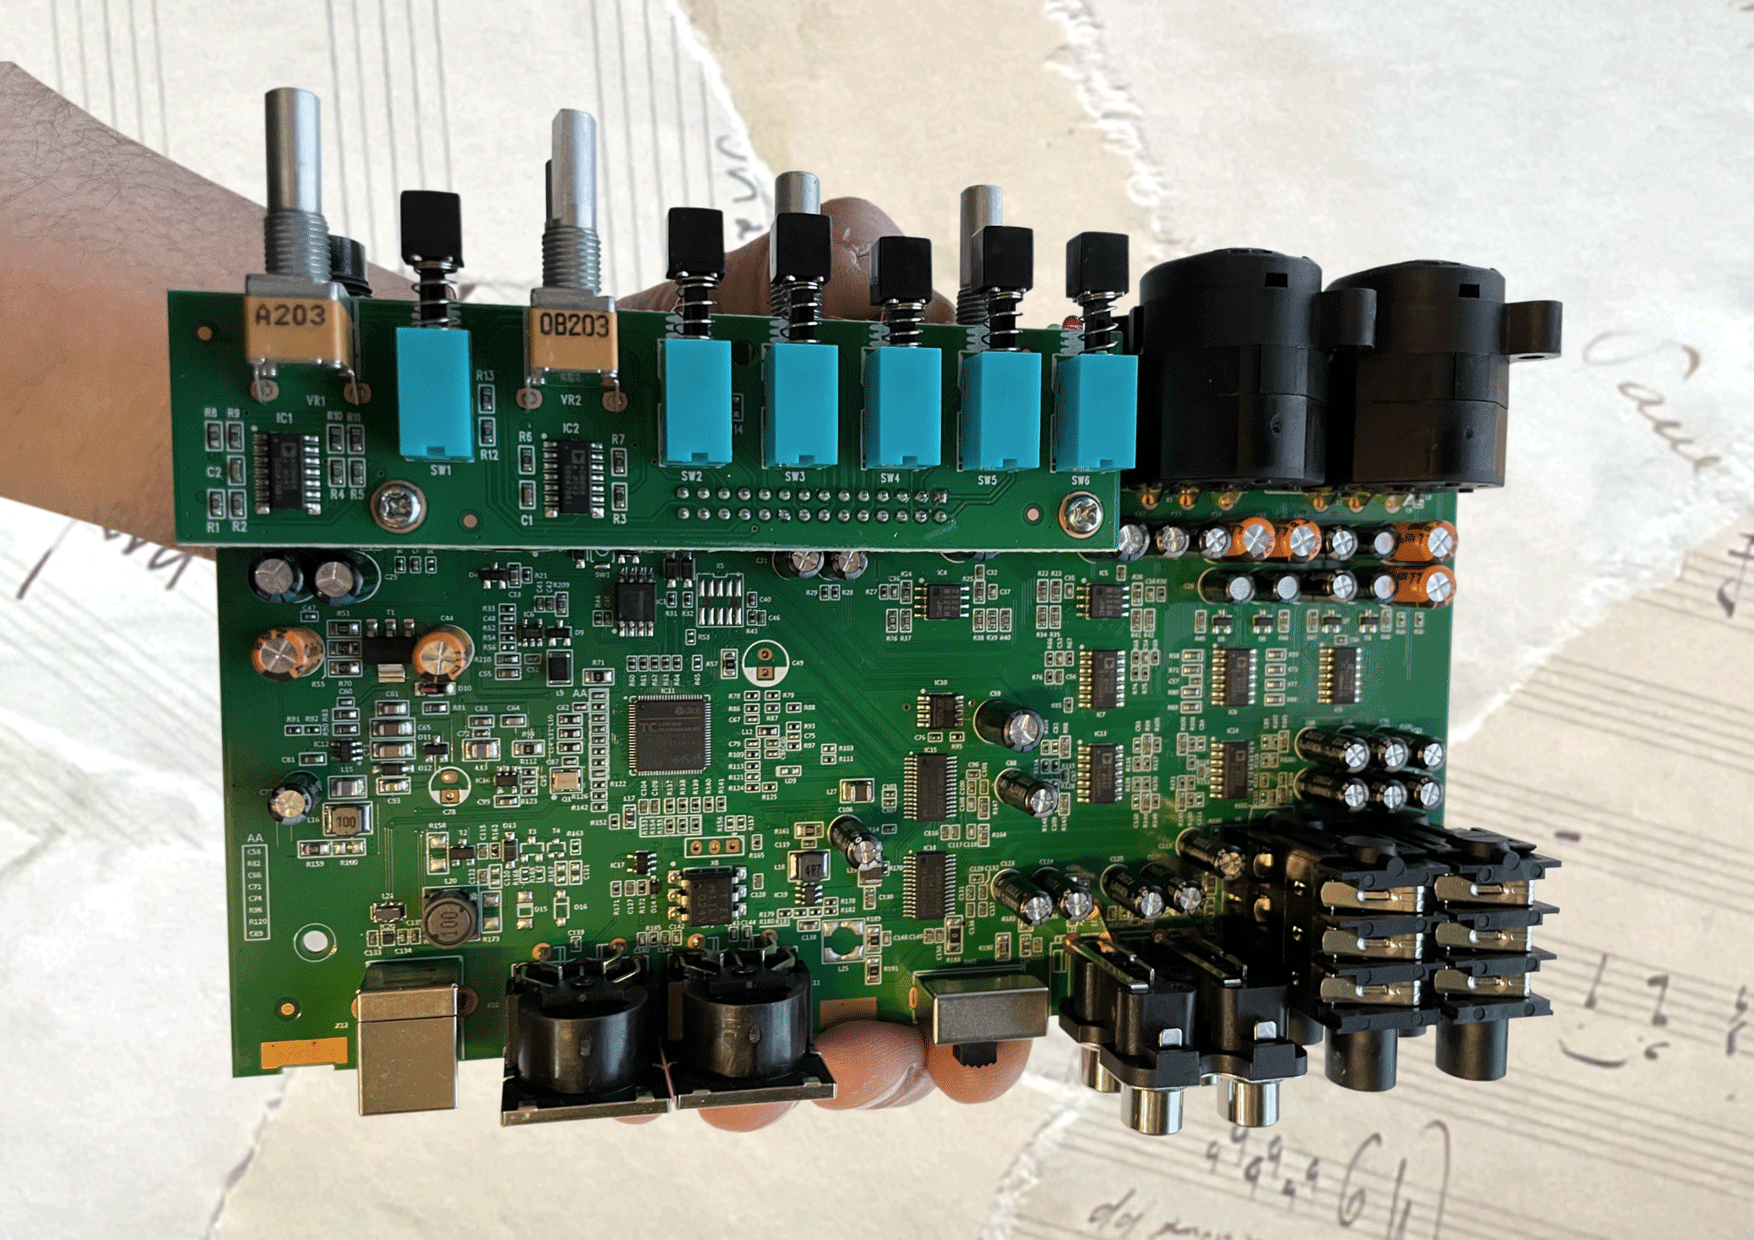 The exposed circuit board of the Behringer U-Phoria UMC204HD